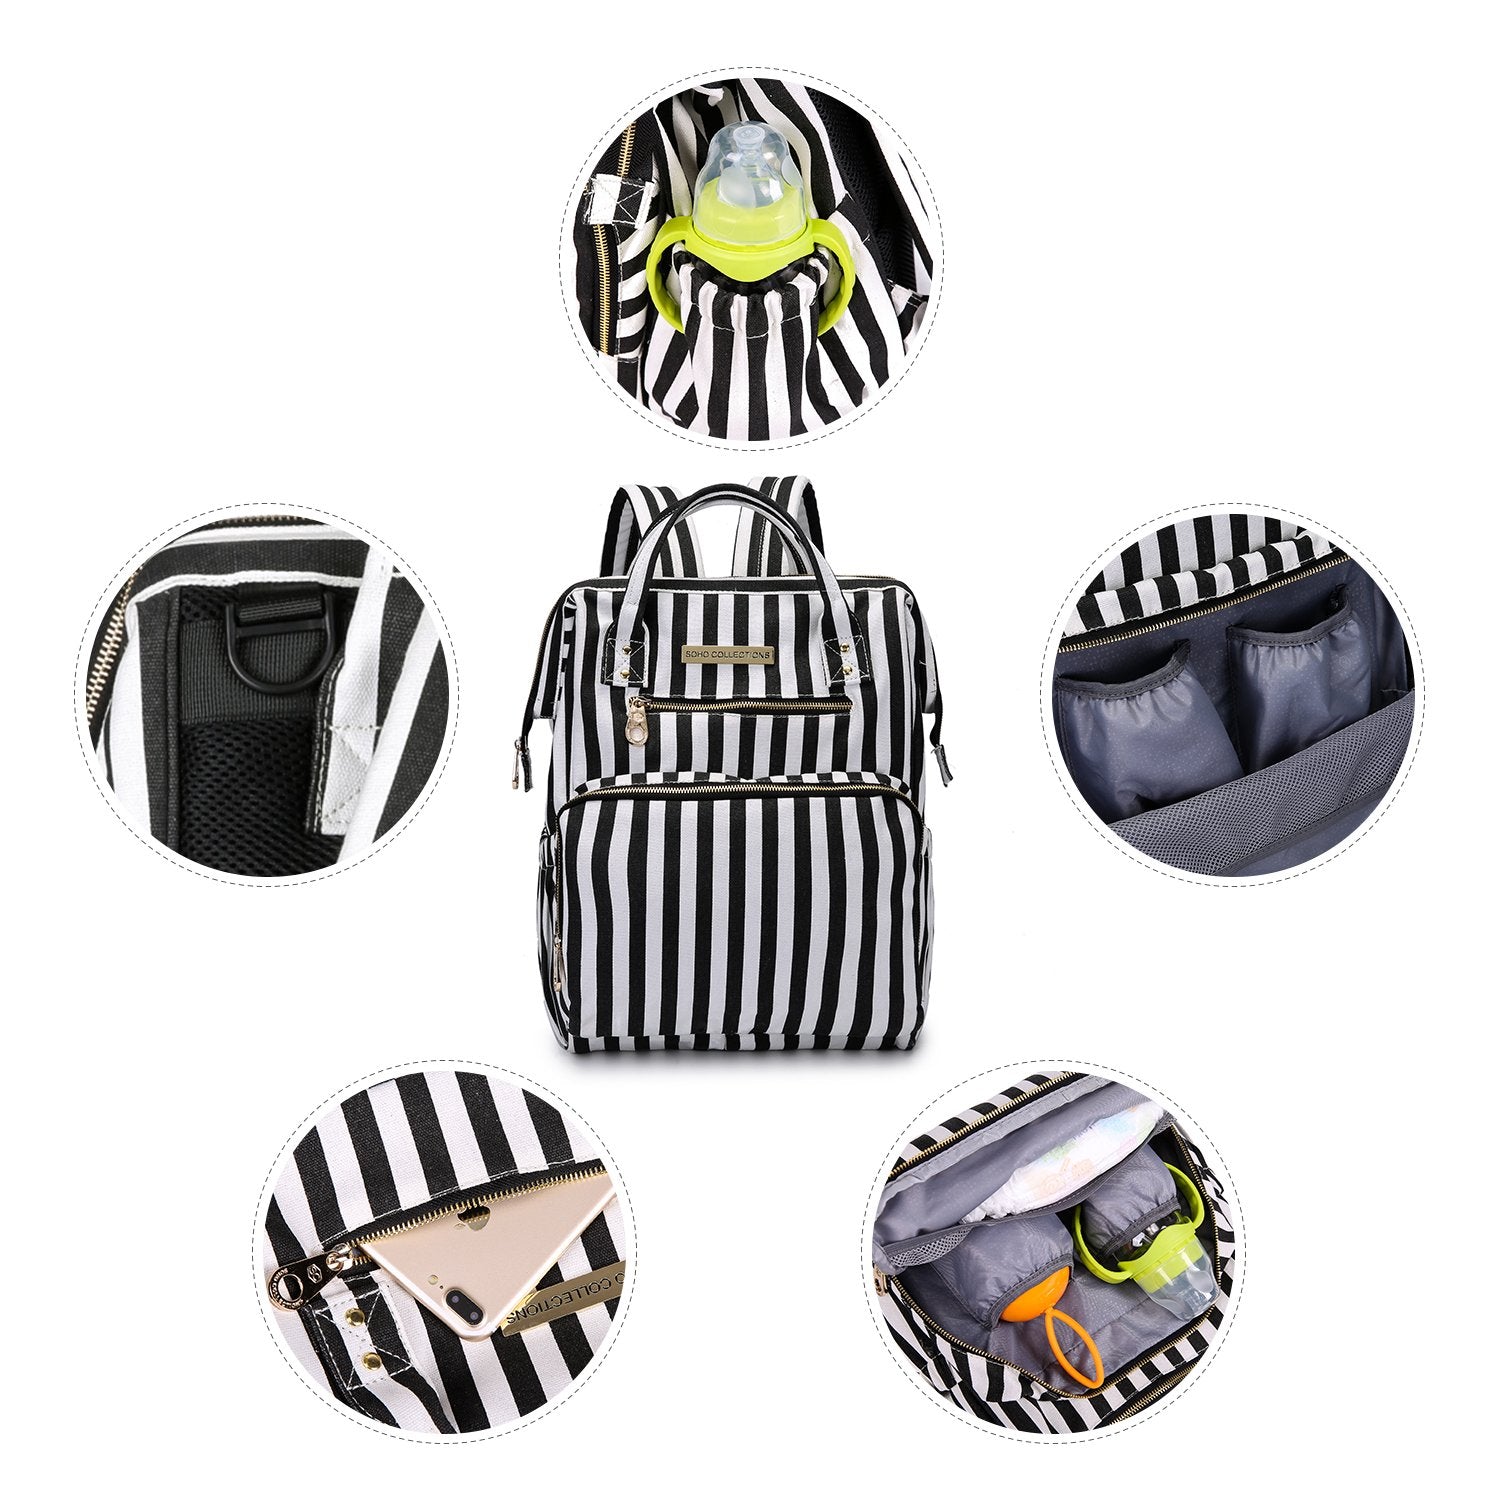 SoHo Collections Backpack Diaper Bag, Black & White Stripe